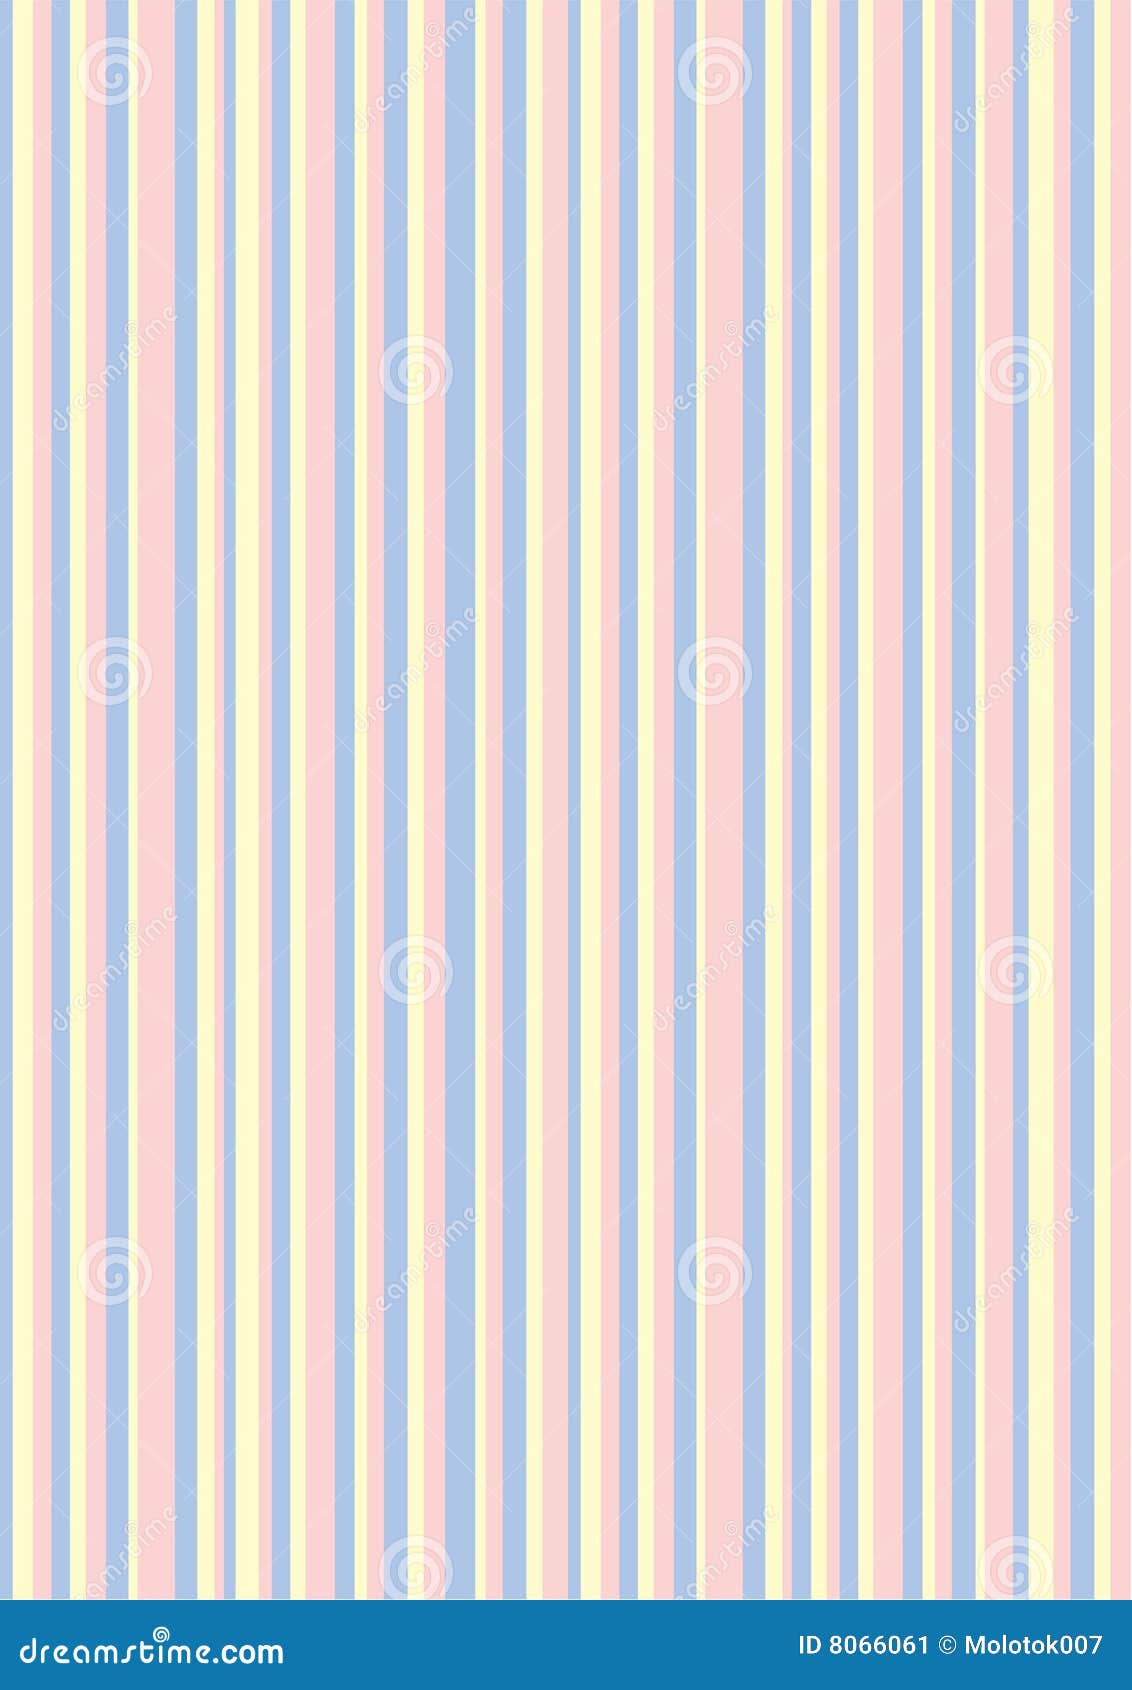 retro (seamless) stripe pattern with pinky